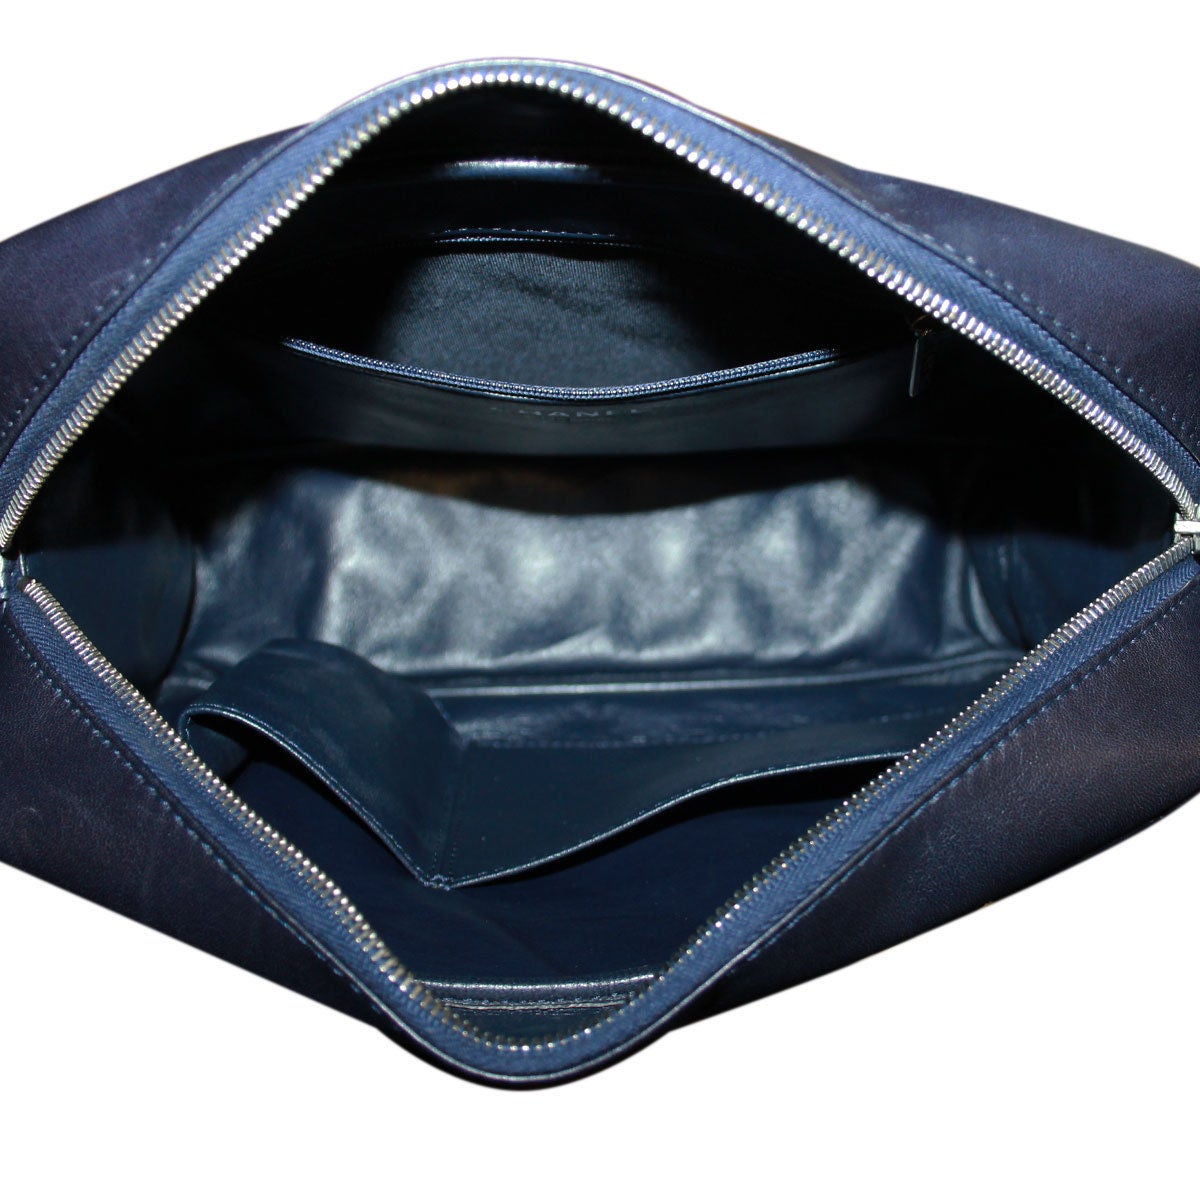 Chanel Navy Lambskin No. 12 Camera Bag Purse SHW Shoulder Bag 4